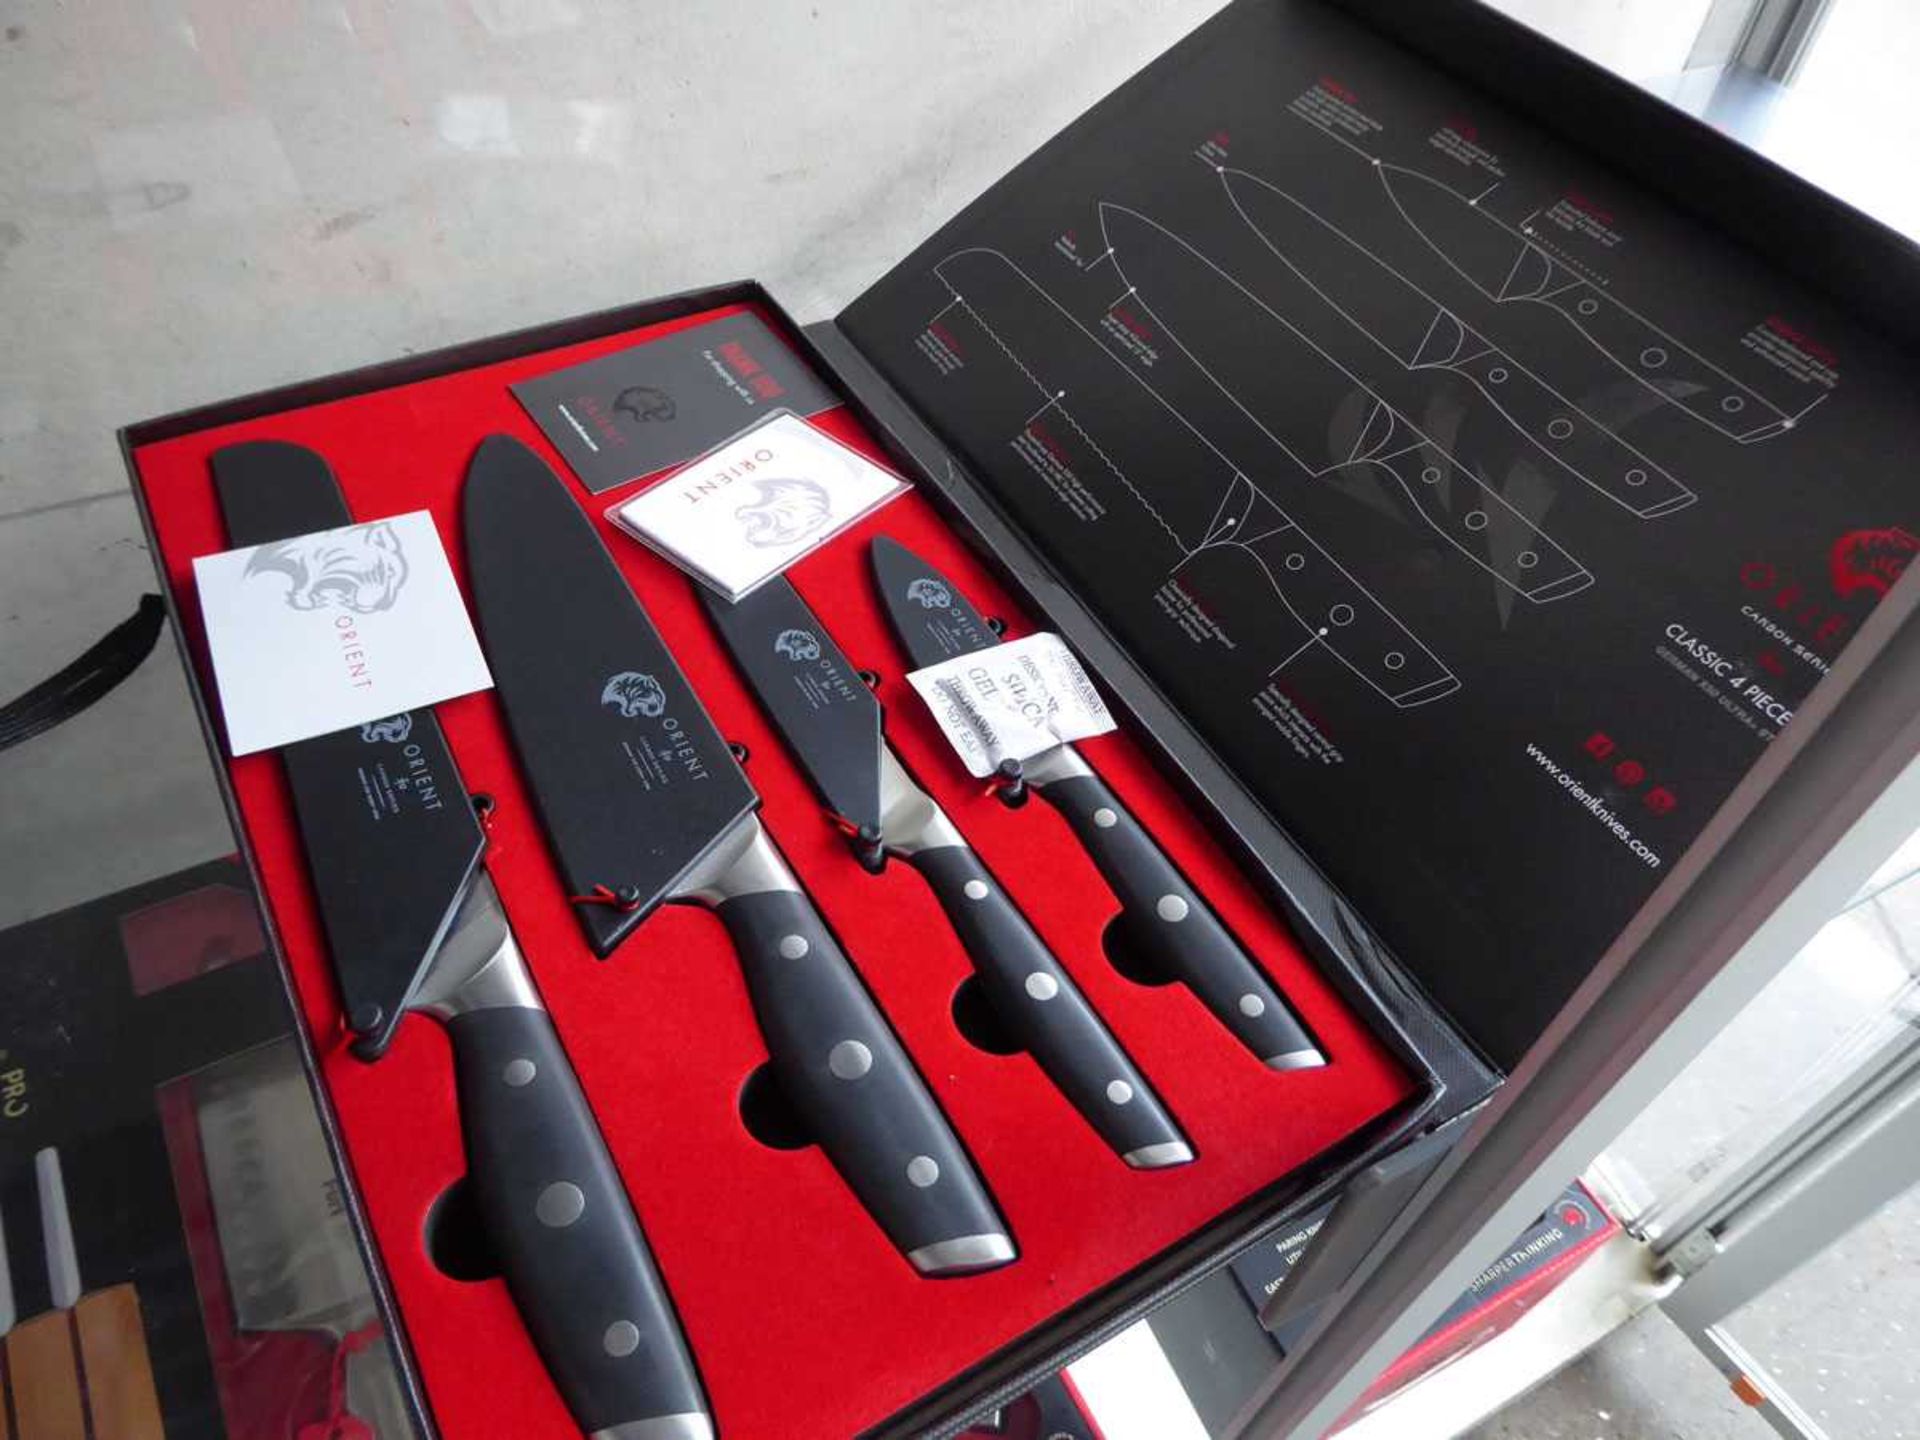 +VAT Orient carbon series classic 4 piece knife set in presentation box